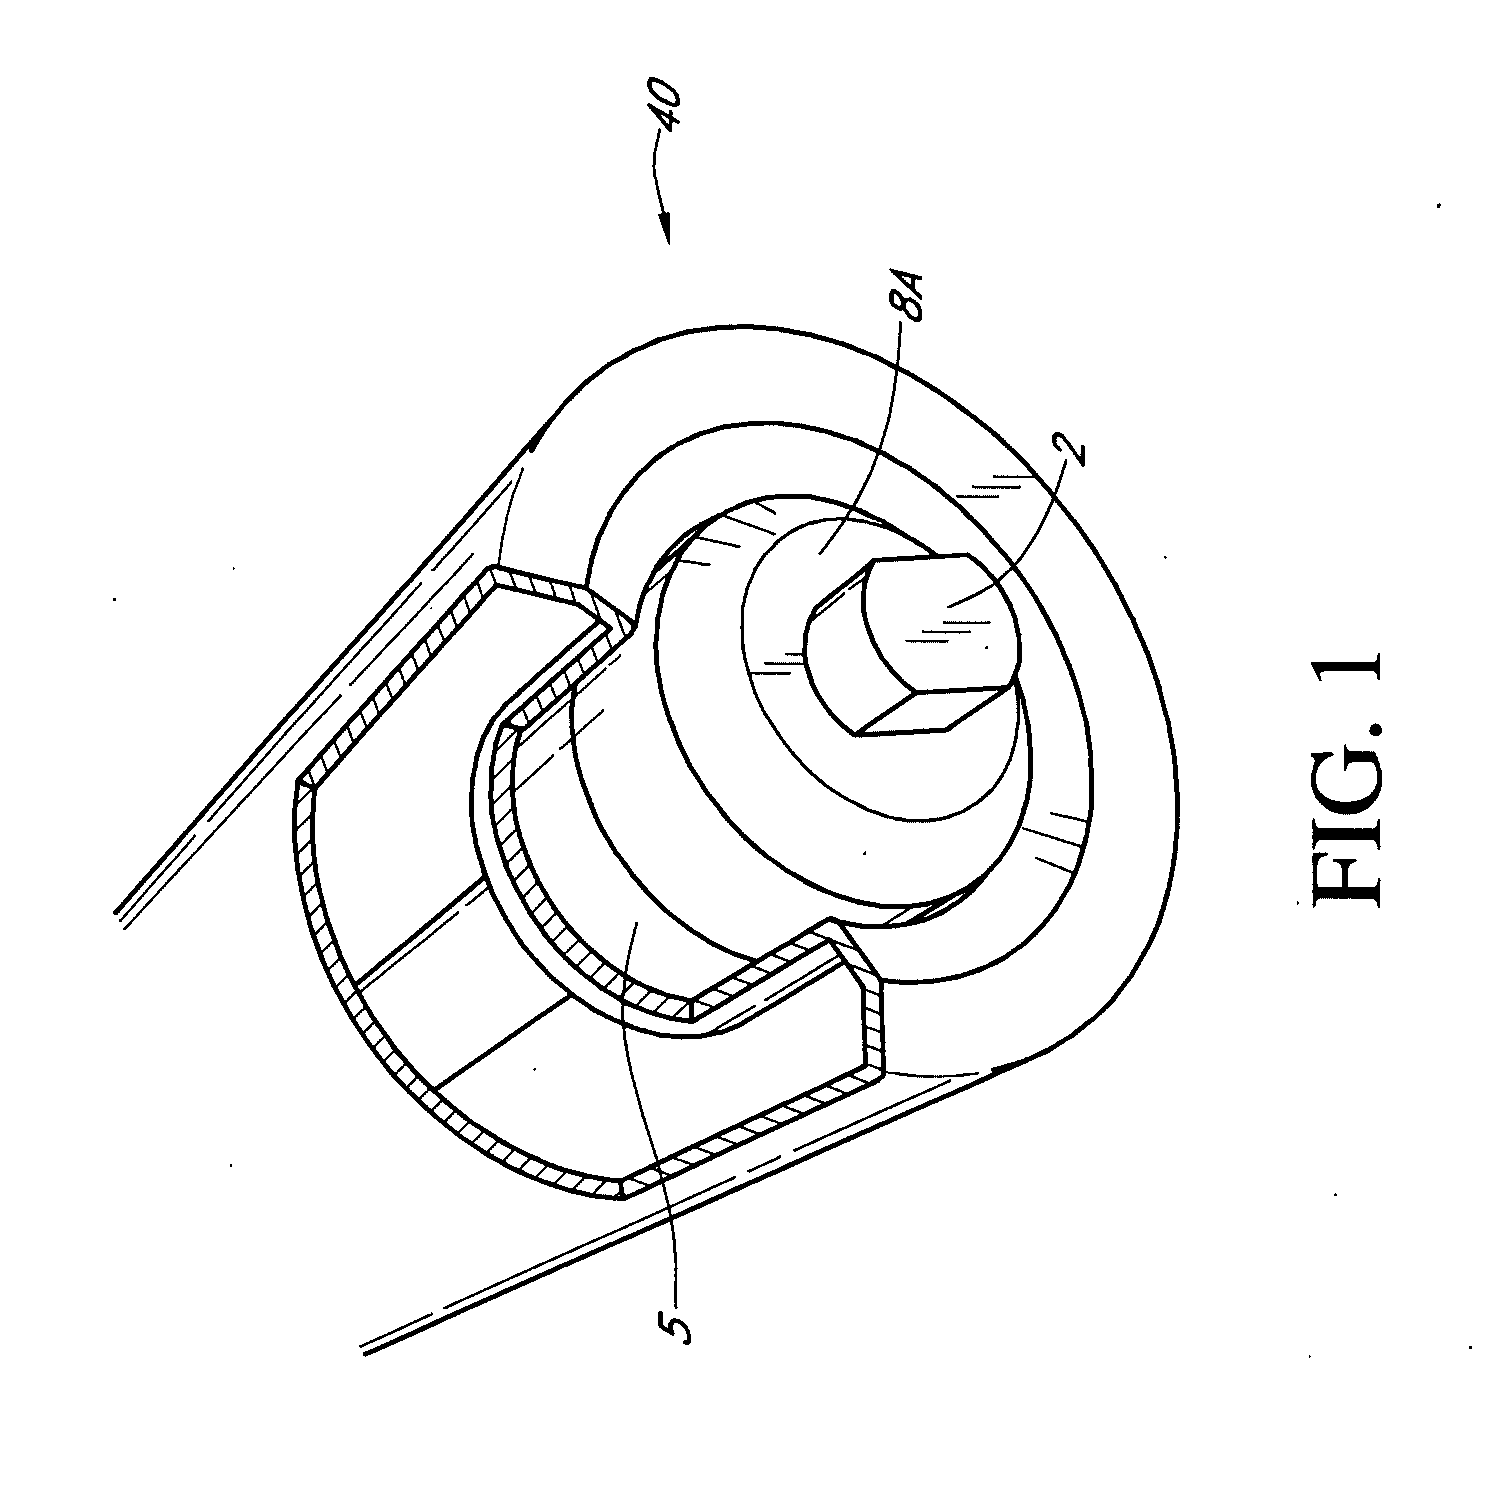 Bearing isolator and conveyor roller